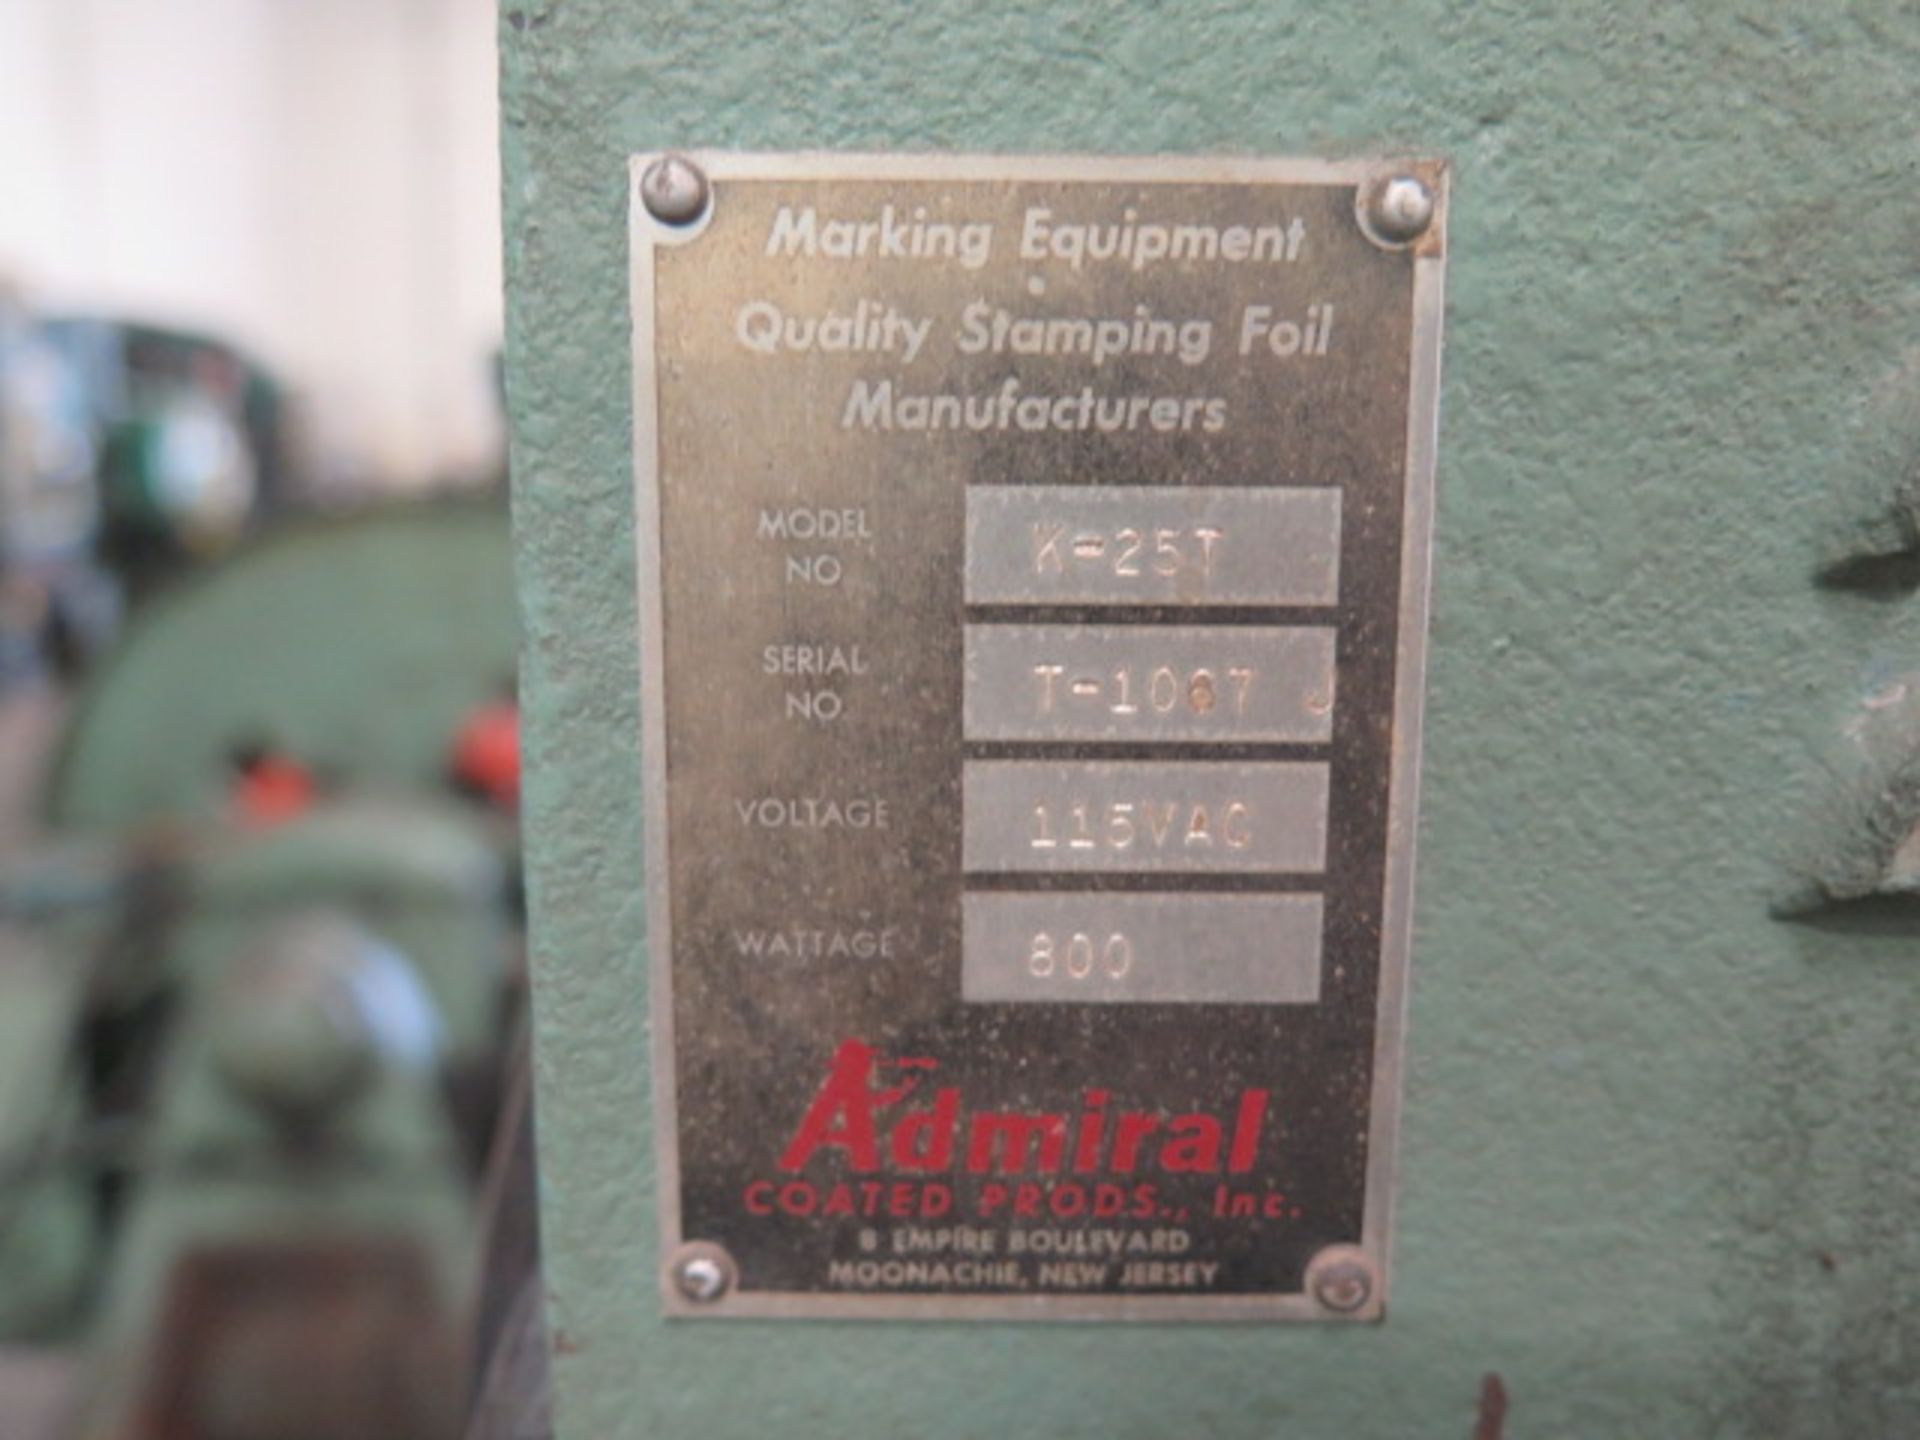 Kensol 25 mdl. K-25T 800 Watt Pneumatic Hot Stamping Press s/n T-1067 w/ Heat Controller, Adjustable - Image 6 of 6